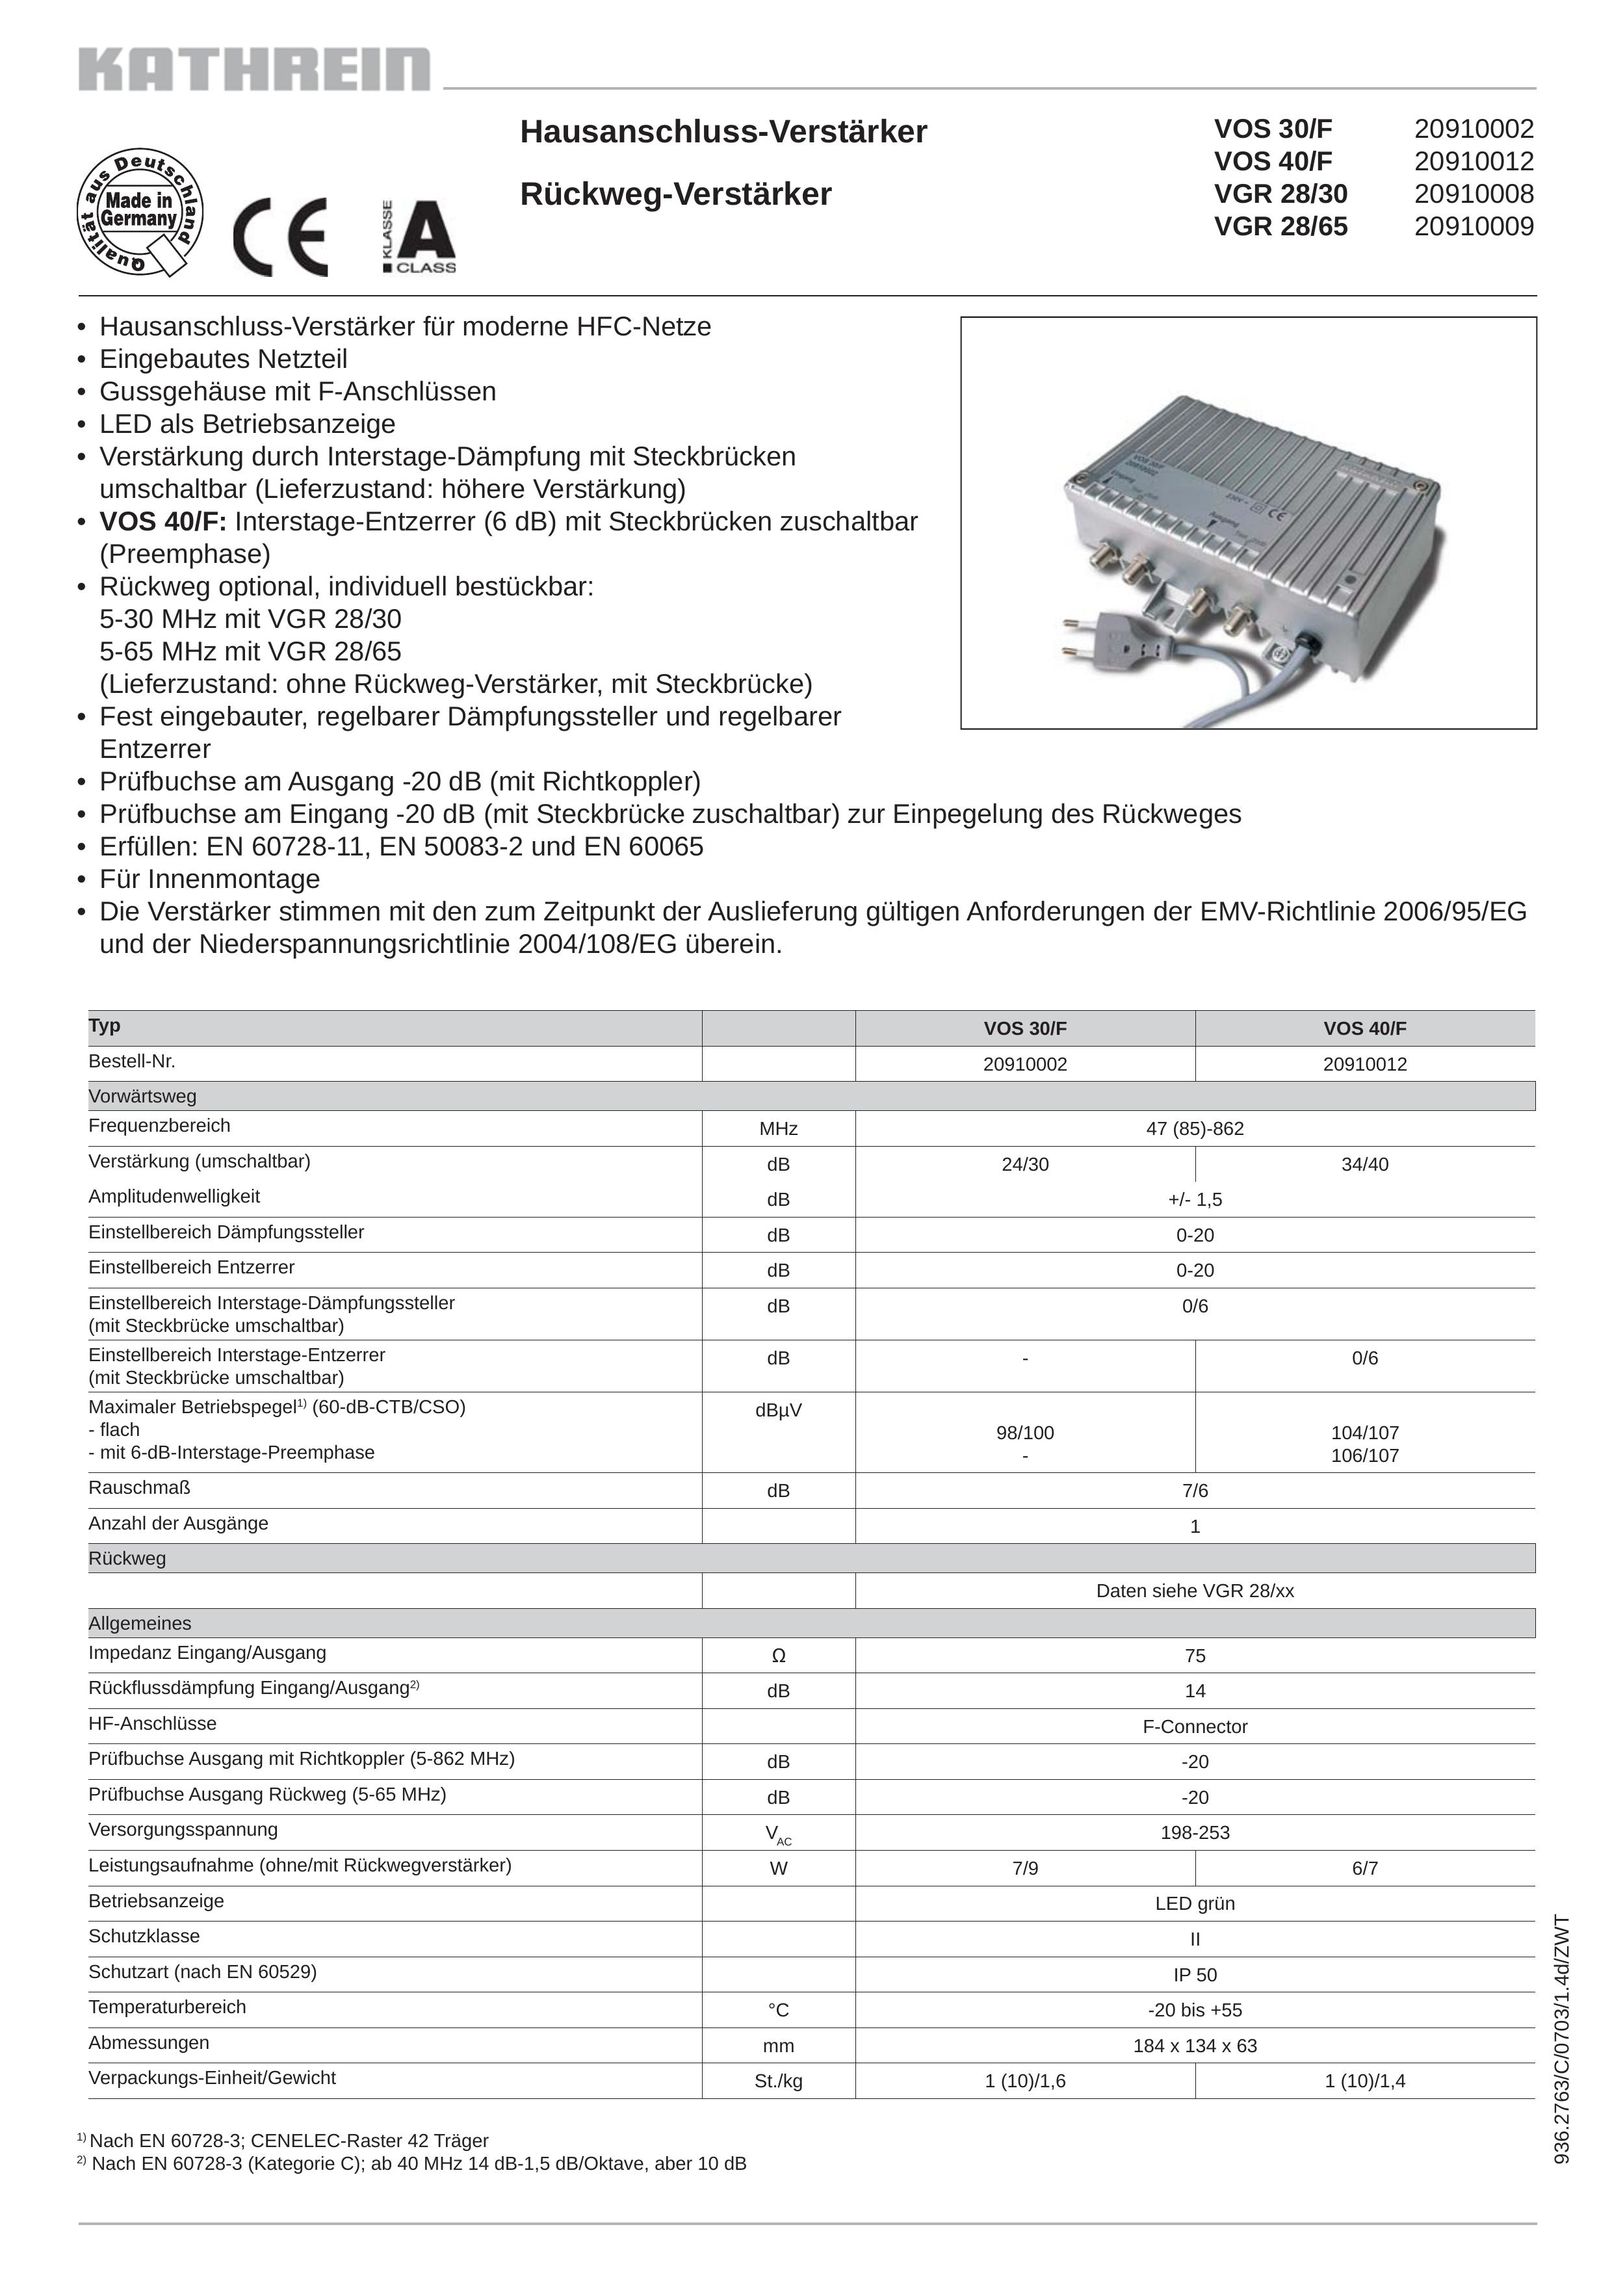 Kathrein VOS 40/F Car Amplifier User Manual